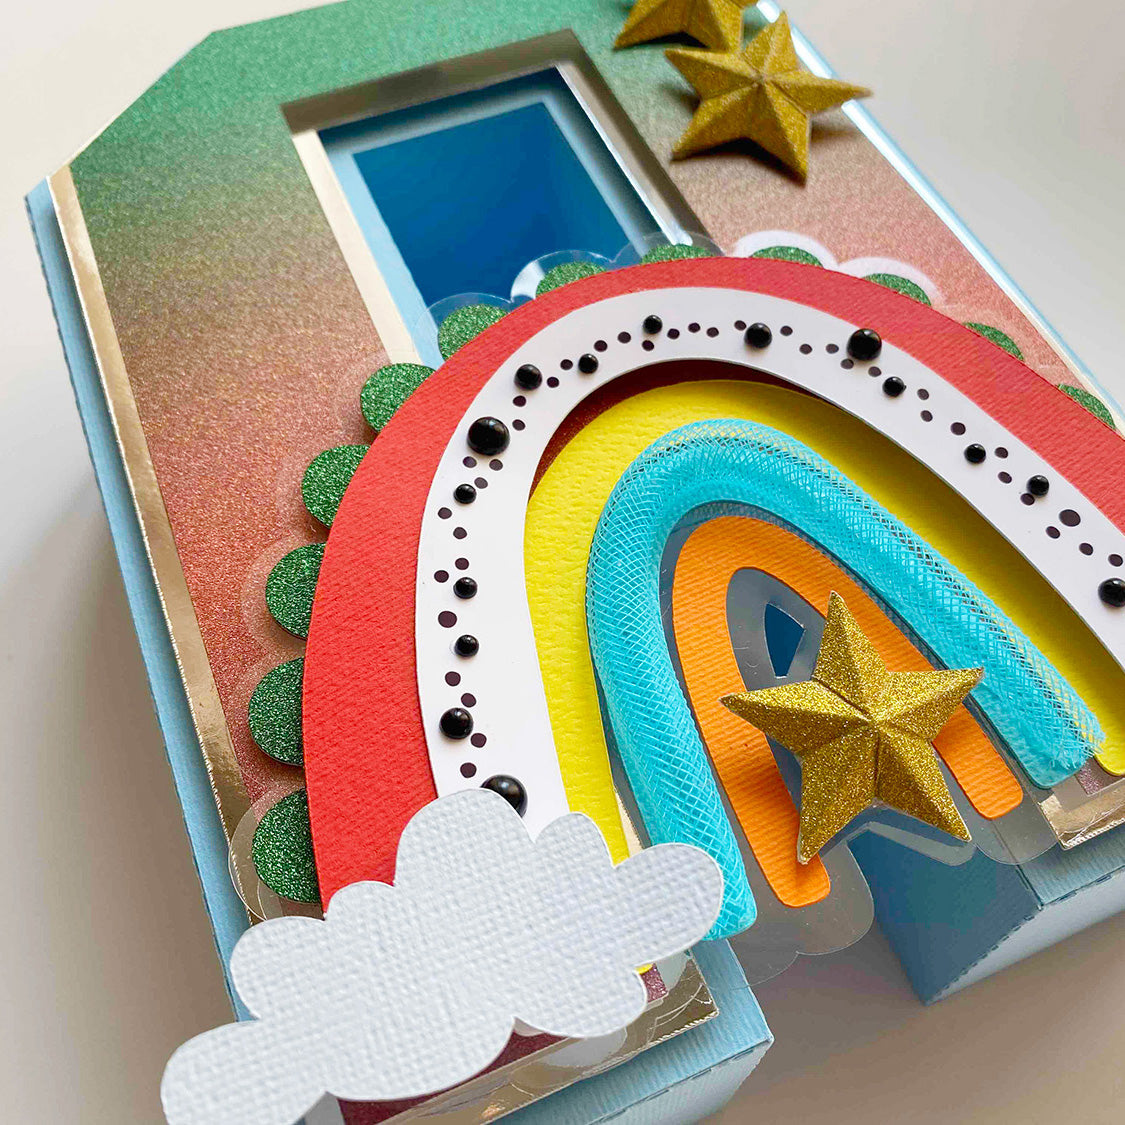 Dimensional Paper Letter Using Multi-Color Glitter paper